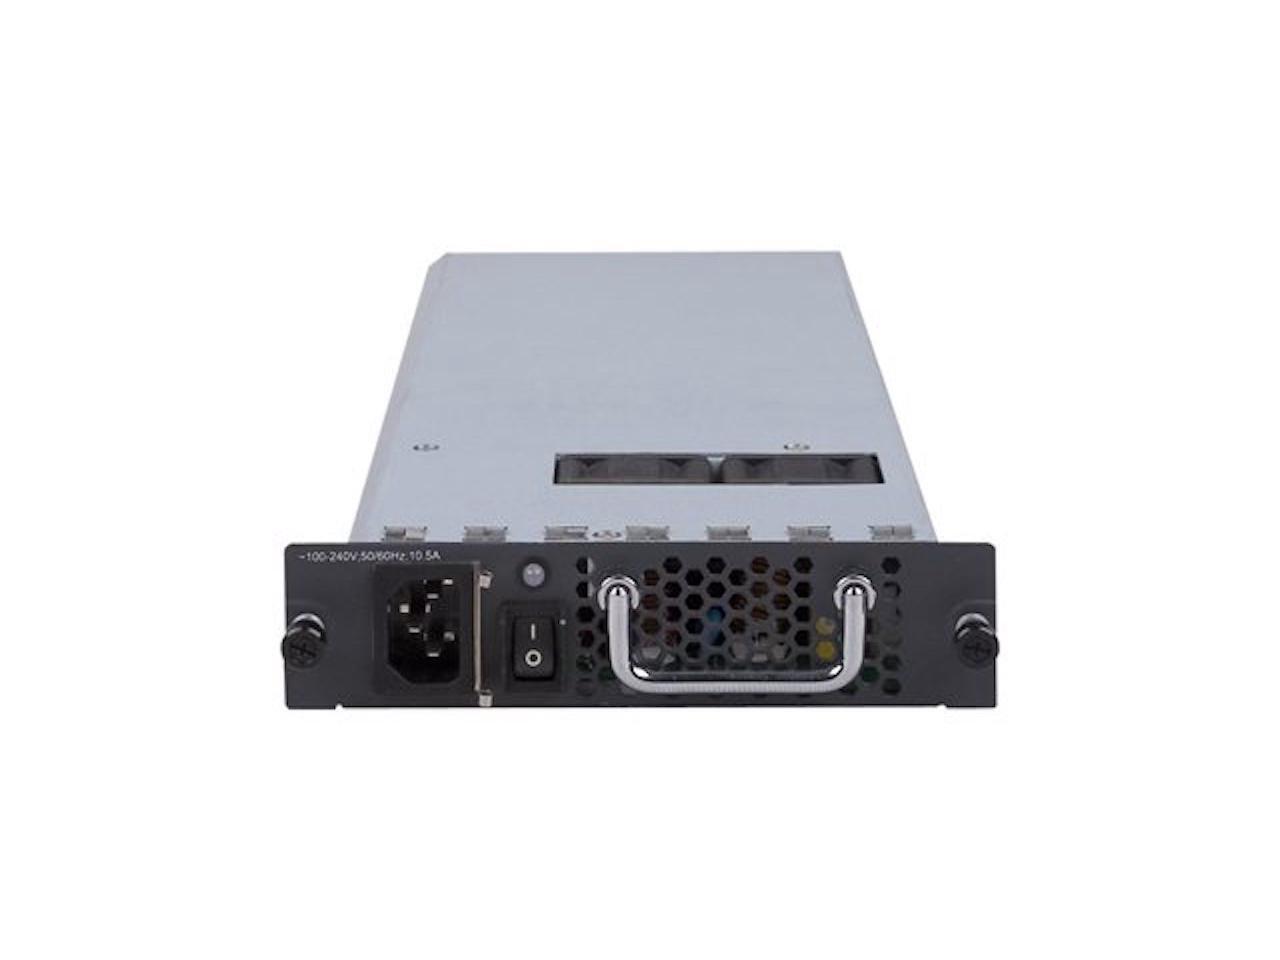 JD217A HP FlexNetwork 7500 650W AC Power Supply - New Open Box